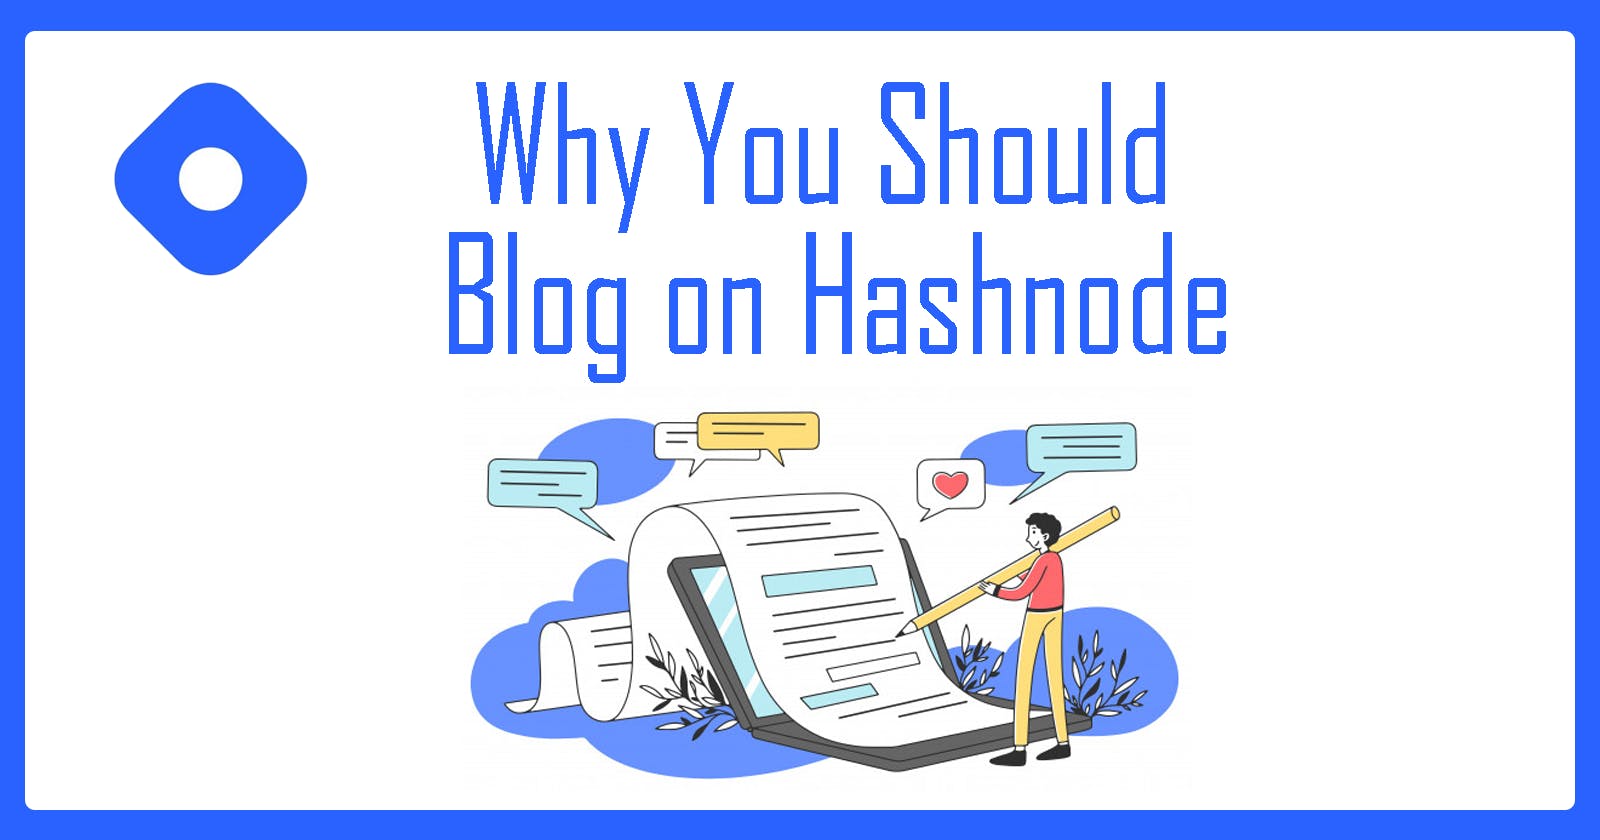 Why Hashnode?